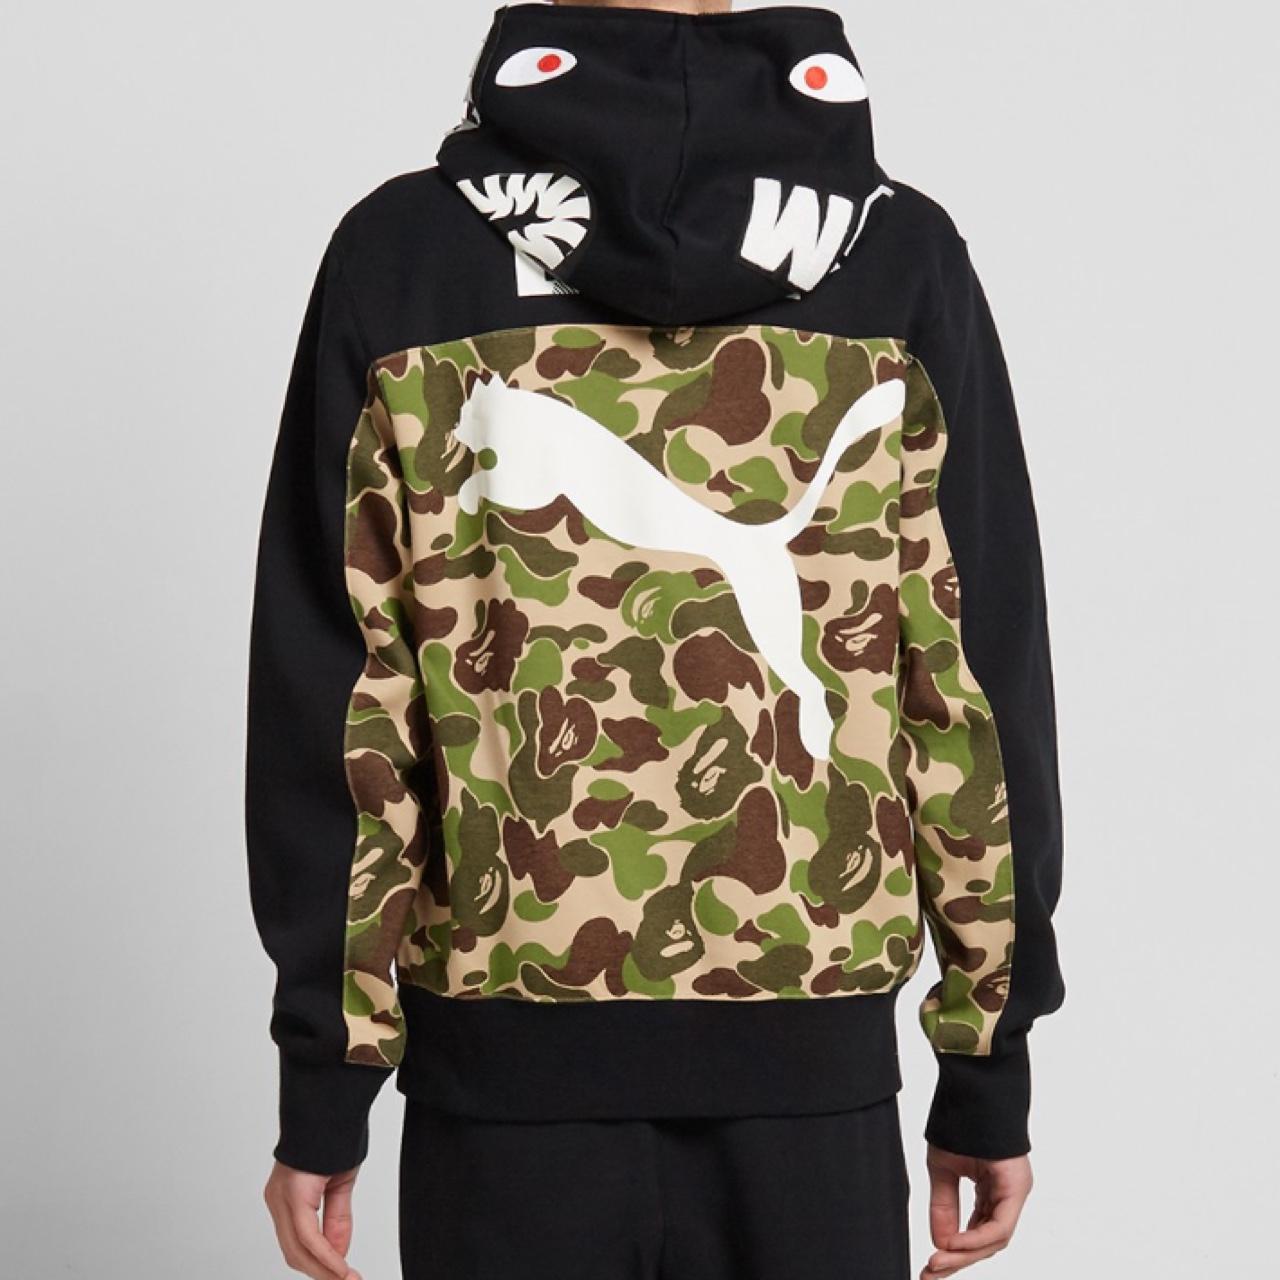 100% authentic x Puma hoodie. Size:... - Depop